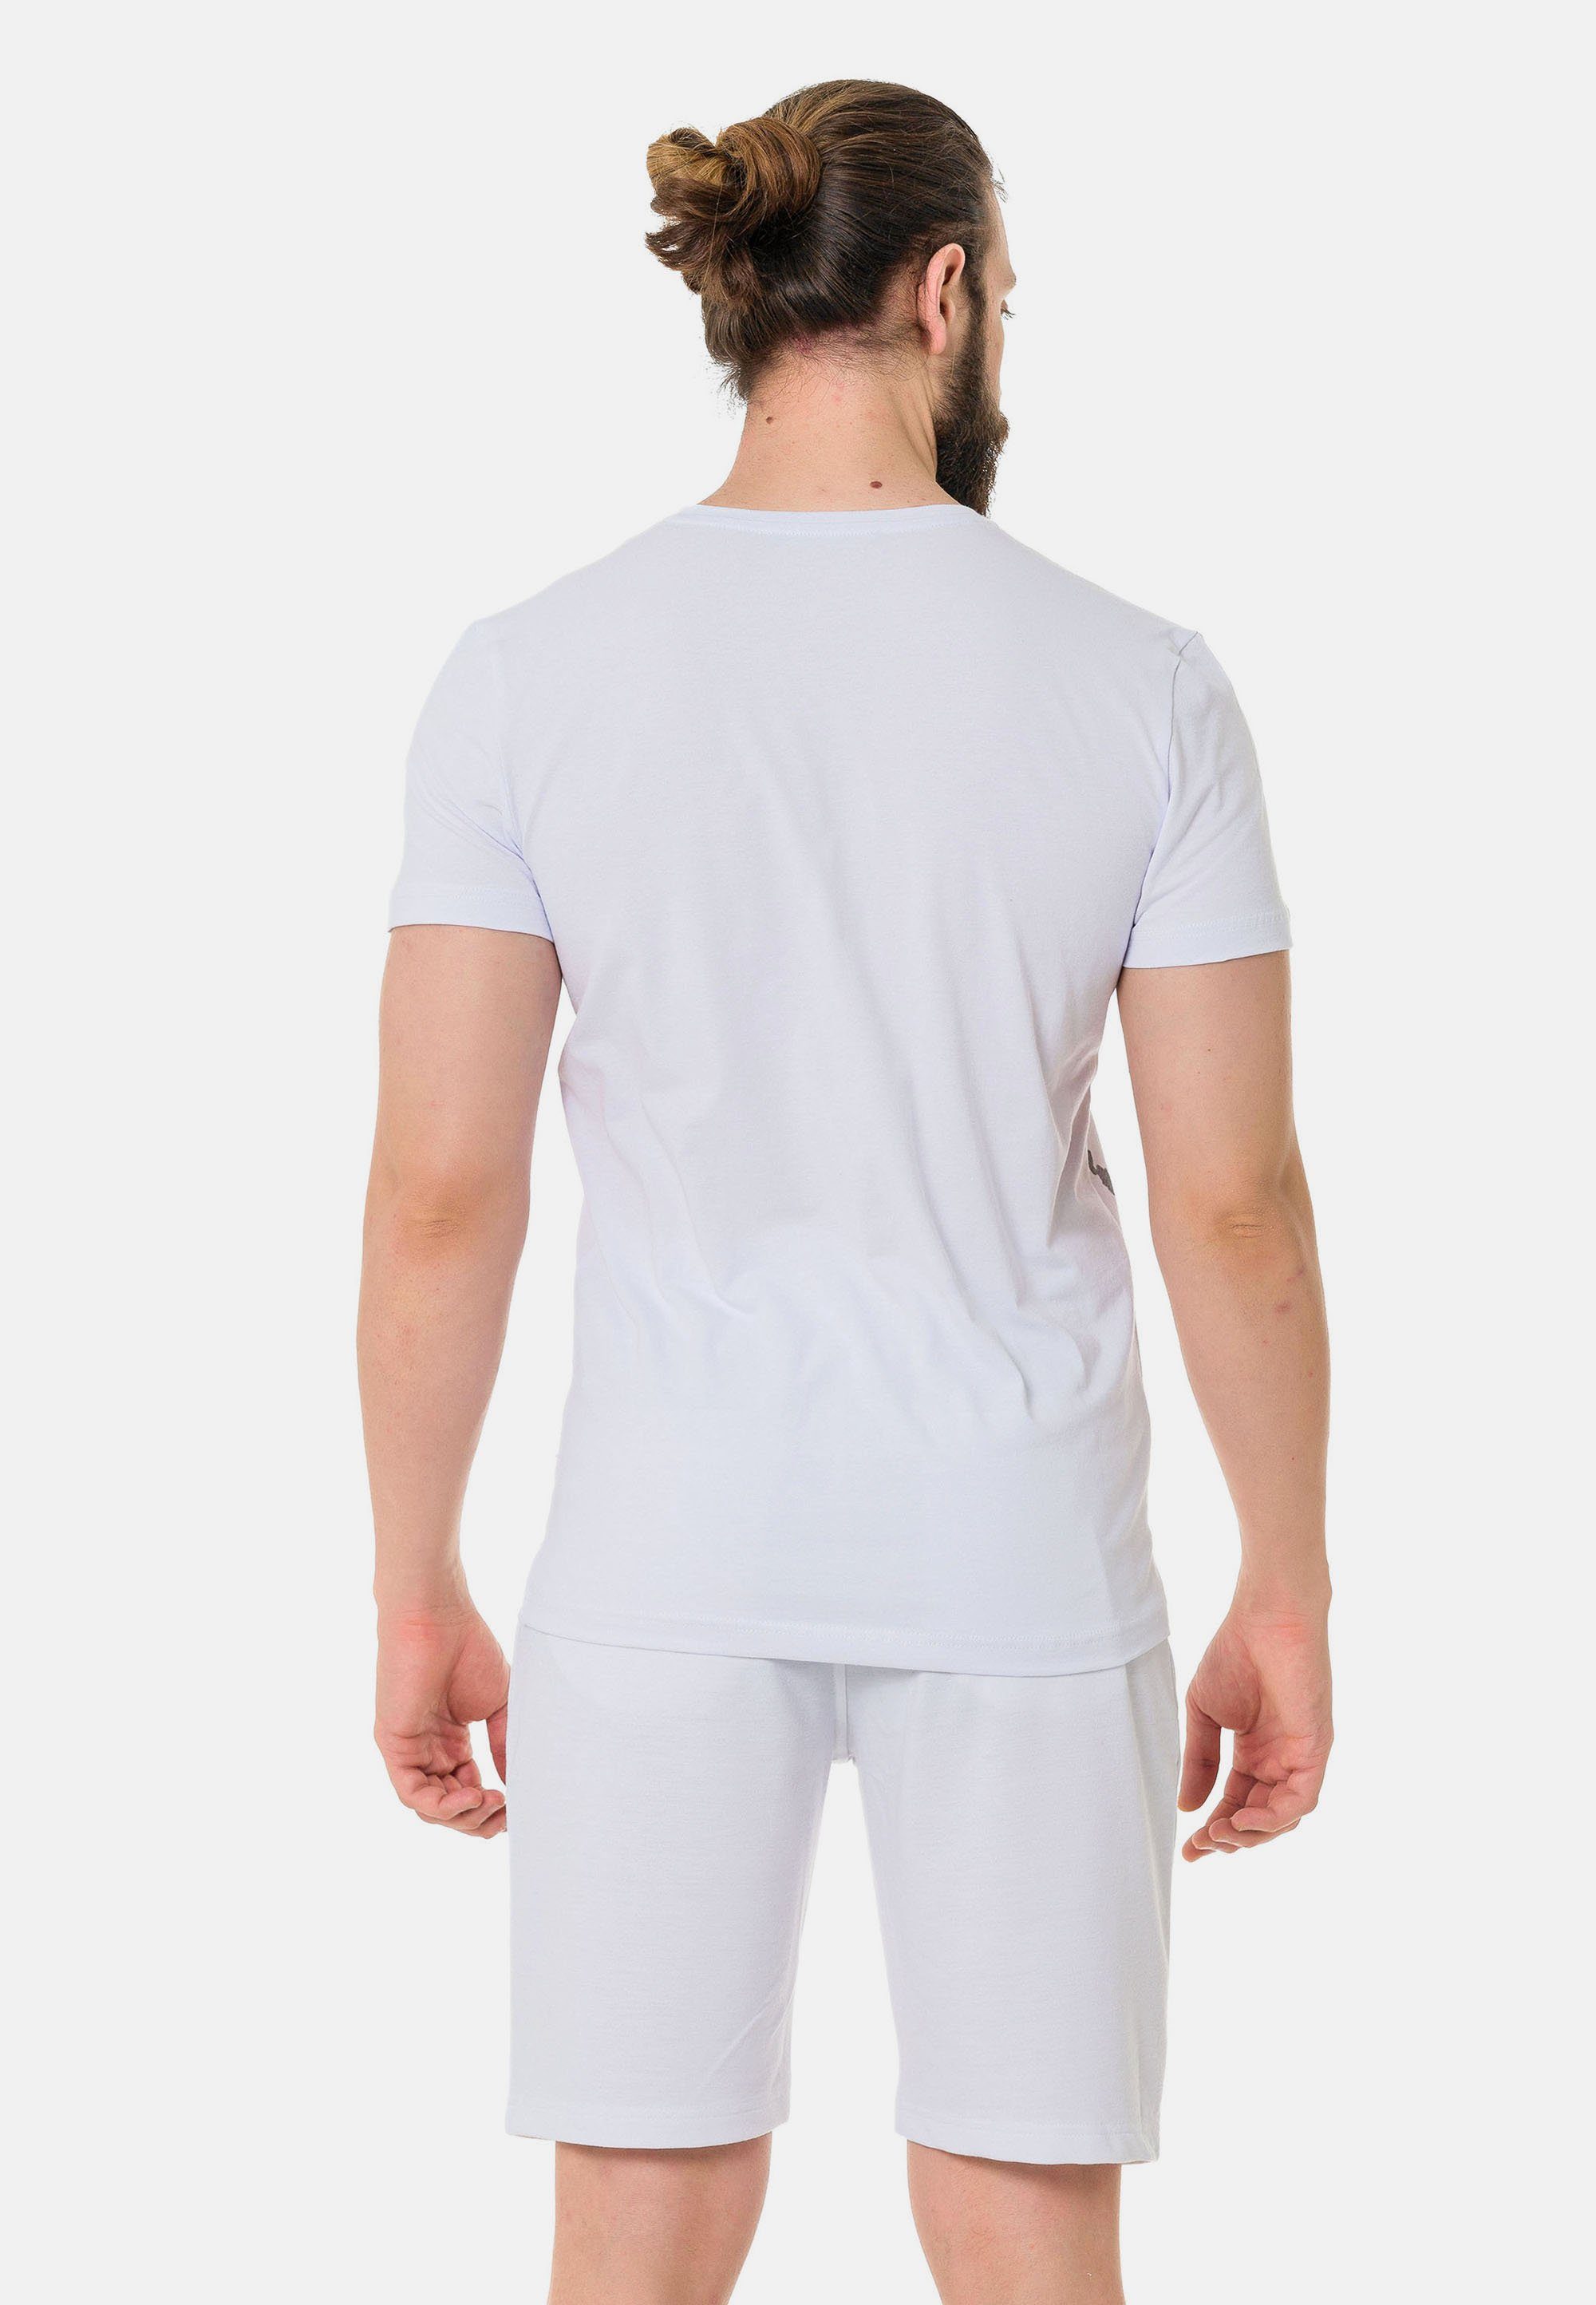 coolem Markenprint T-Shirt Baxx weiß Cipo & mit